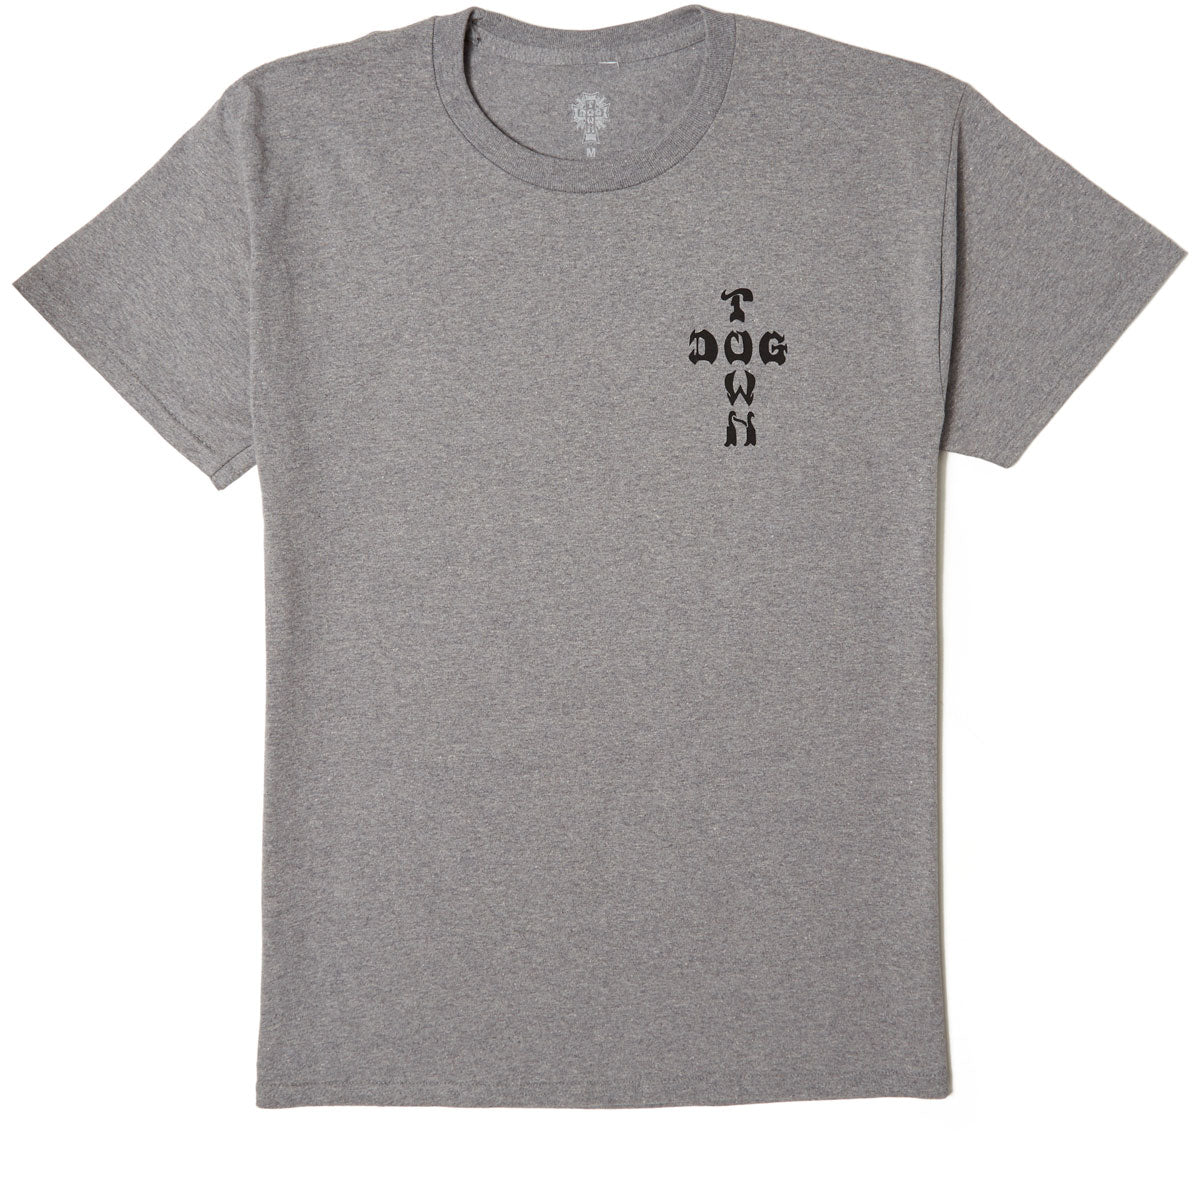 Dogtown Cross Logo T-Shirt - Oxford Grey/Black image 2